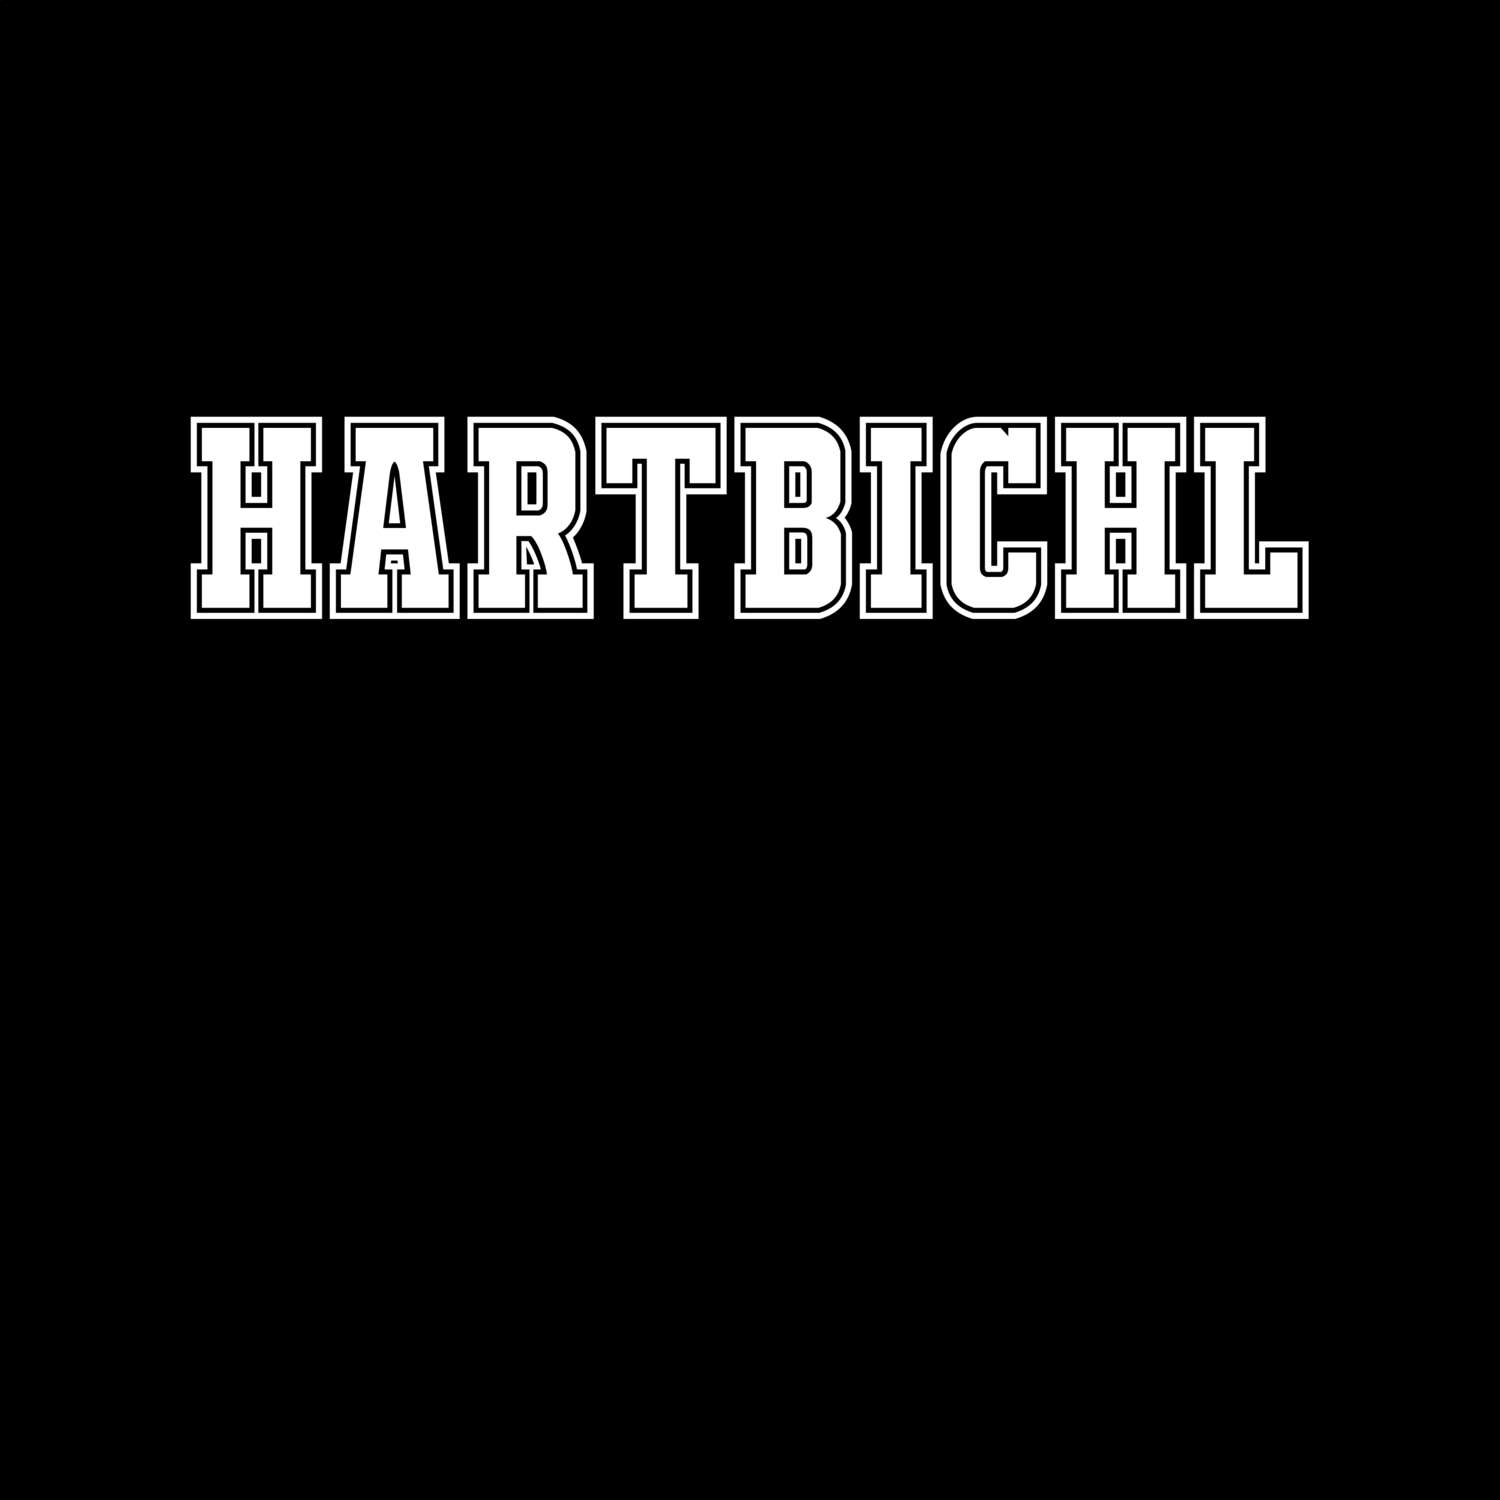 Hartbichl T-Shirt »Classic«